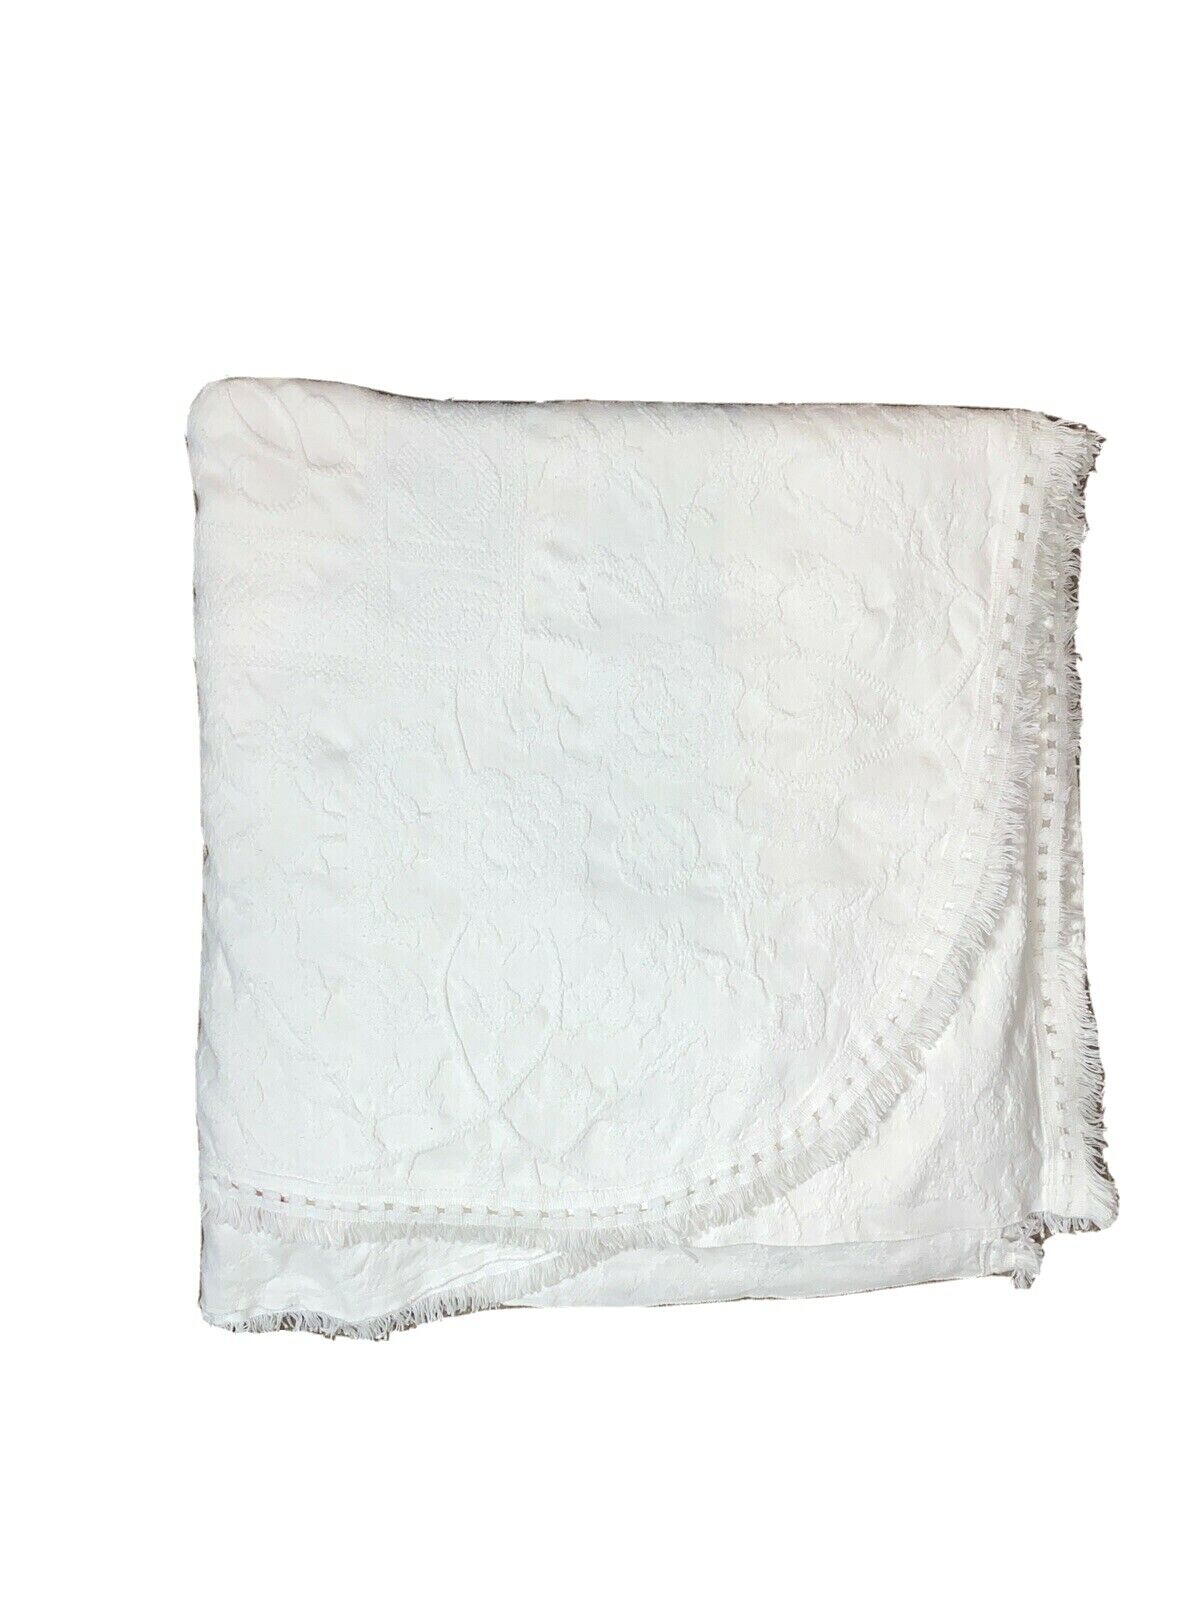 Vintage White Cotton Quilt Blanket Bedspread Woven Fringe Rare 1960s Embroidered